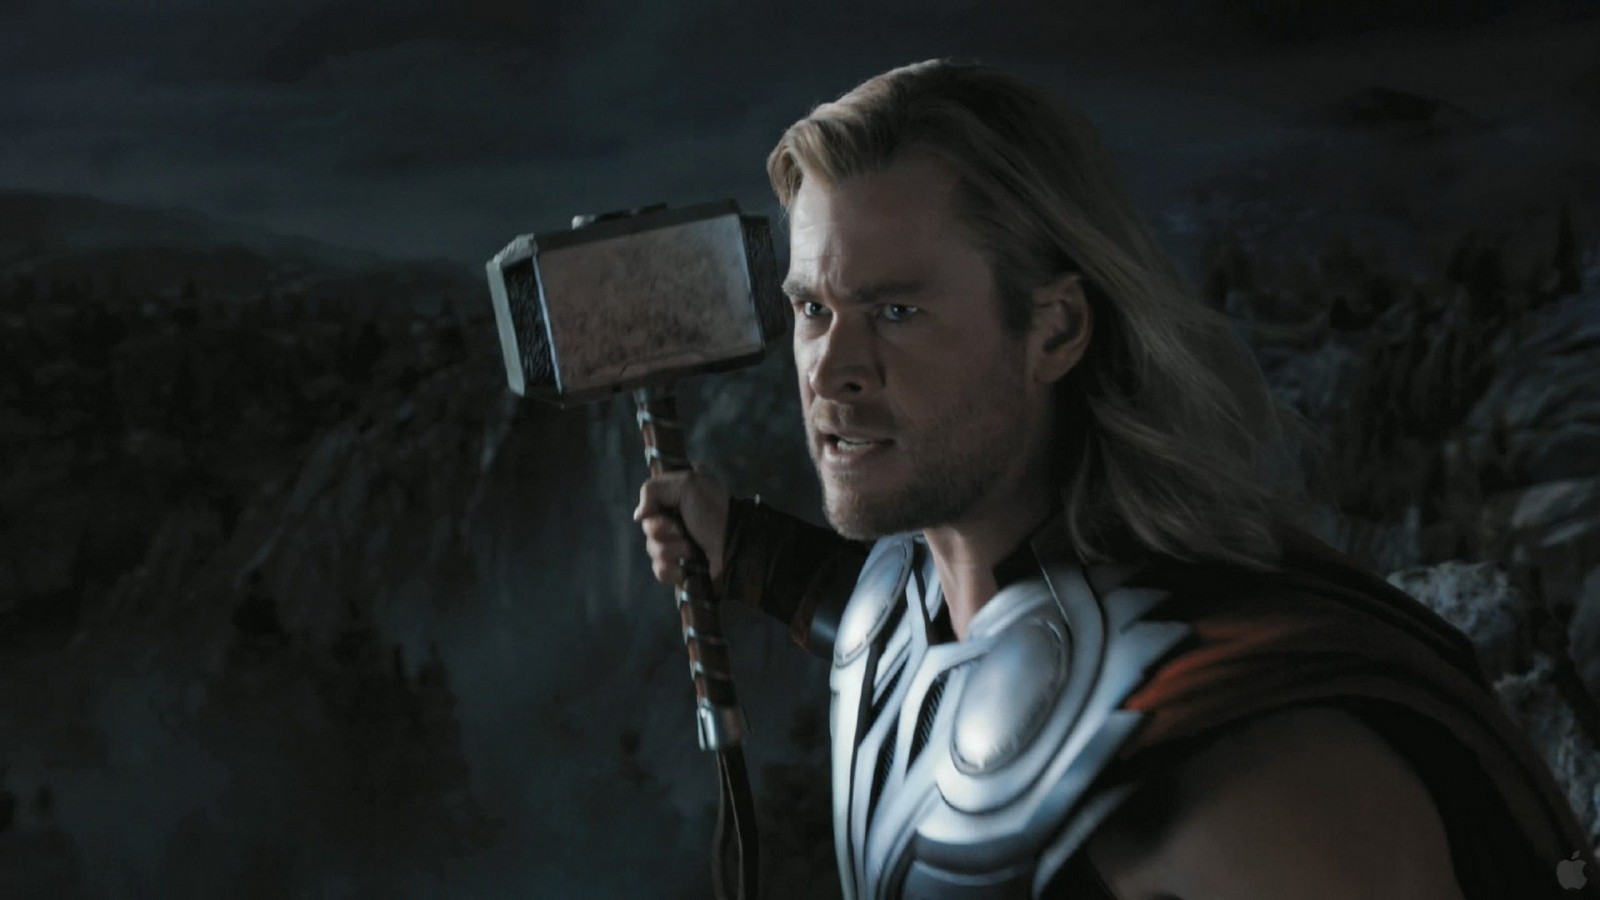 Thor, movies, The Avengers, Marvel Cinematic Universe, Mjolnir, Chris Hemsworth, darkness, screenshot, computer wallpaper, fictional character High quality walls